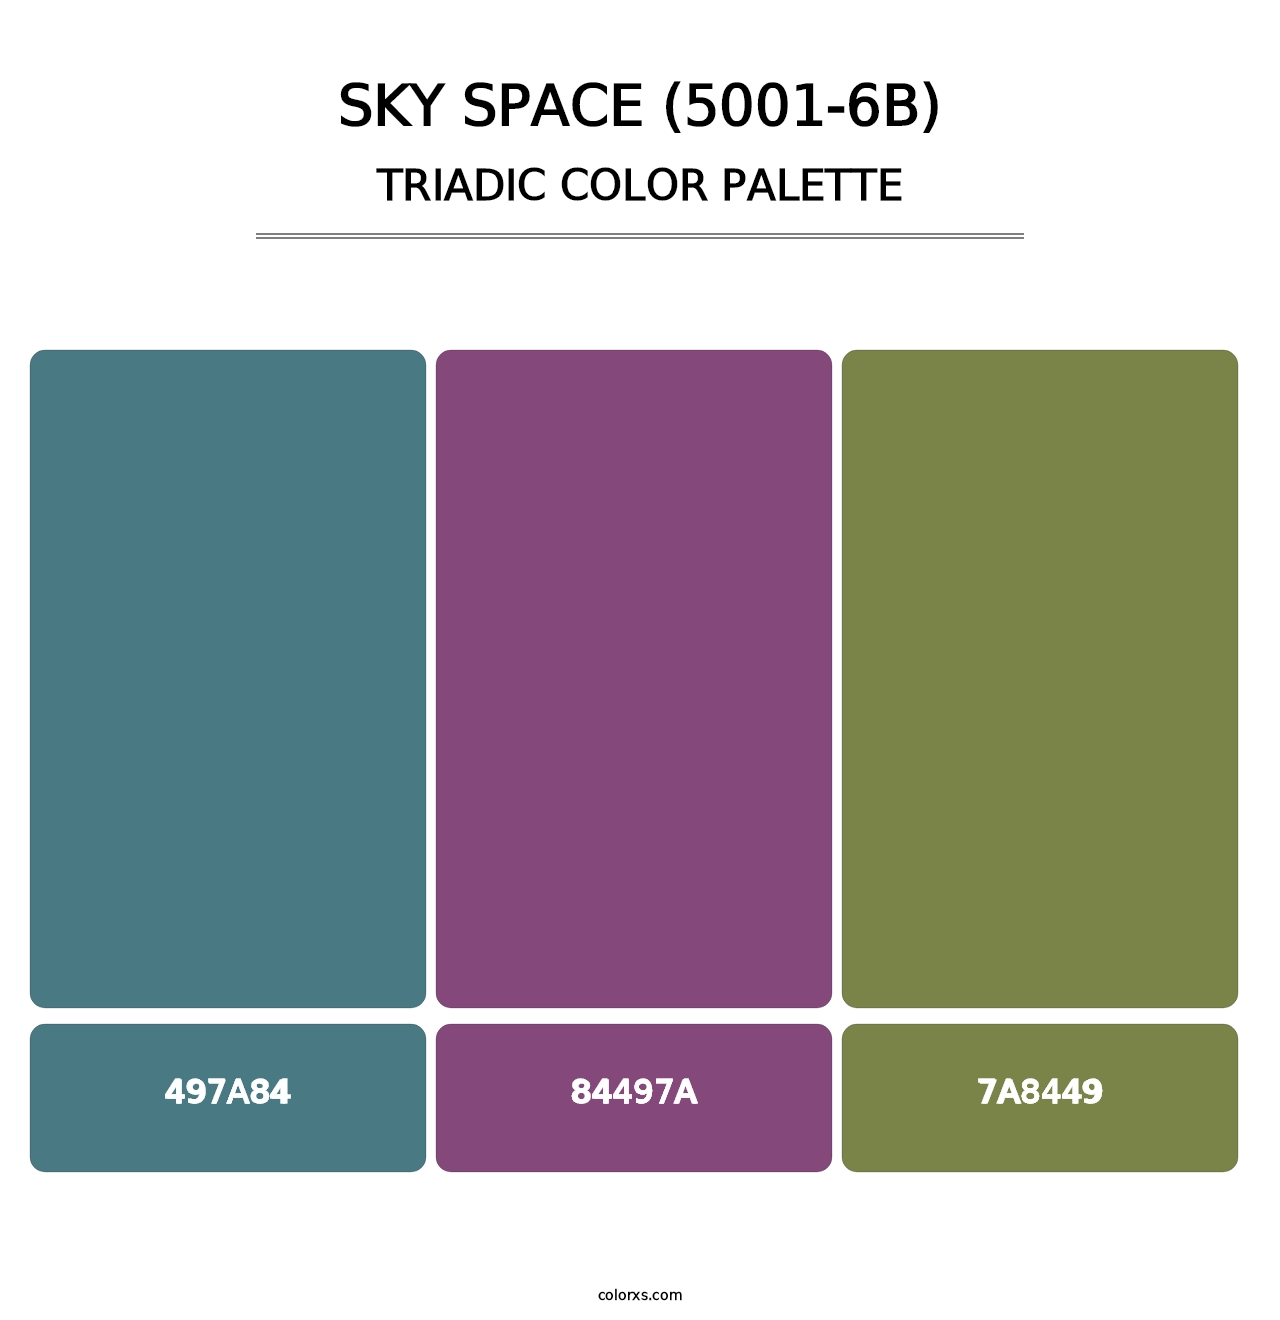 Sky Space (5001-6B) - Triadic Color Palette